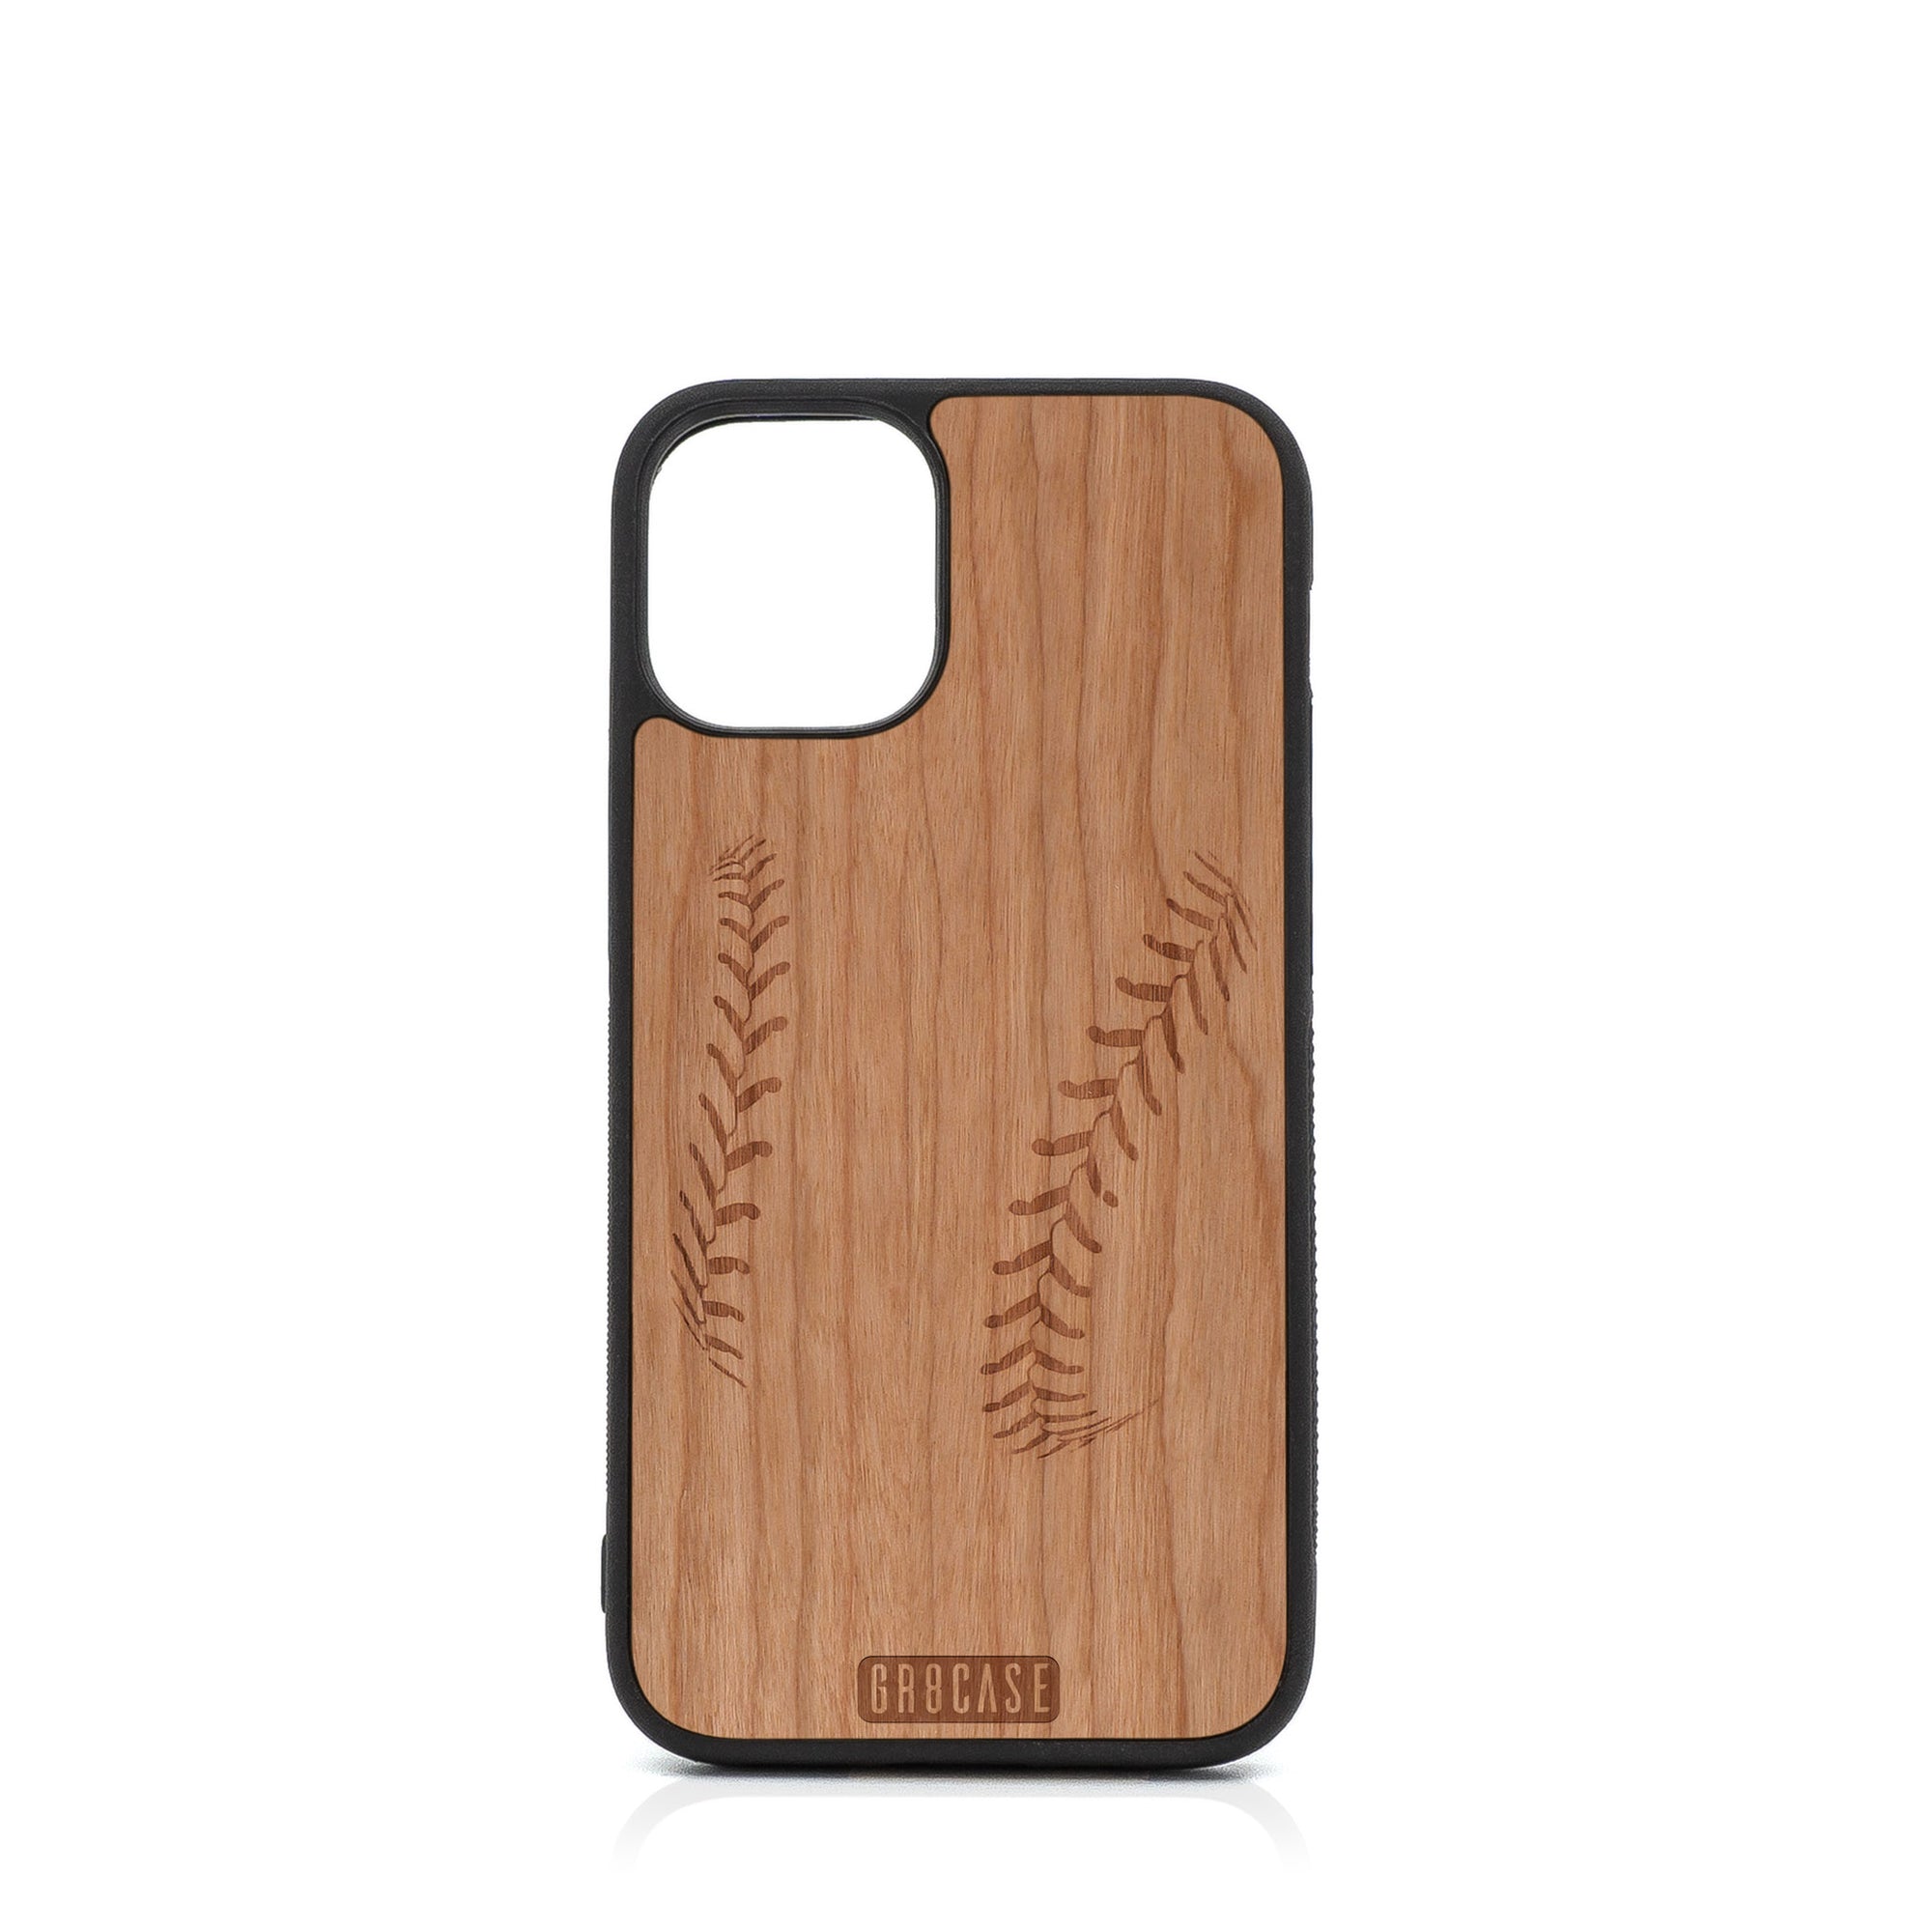 Baseball Stitches Design Wood Case For iPhone 12 Mini